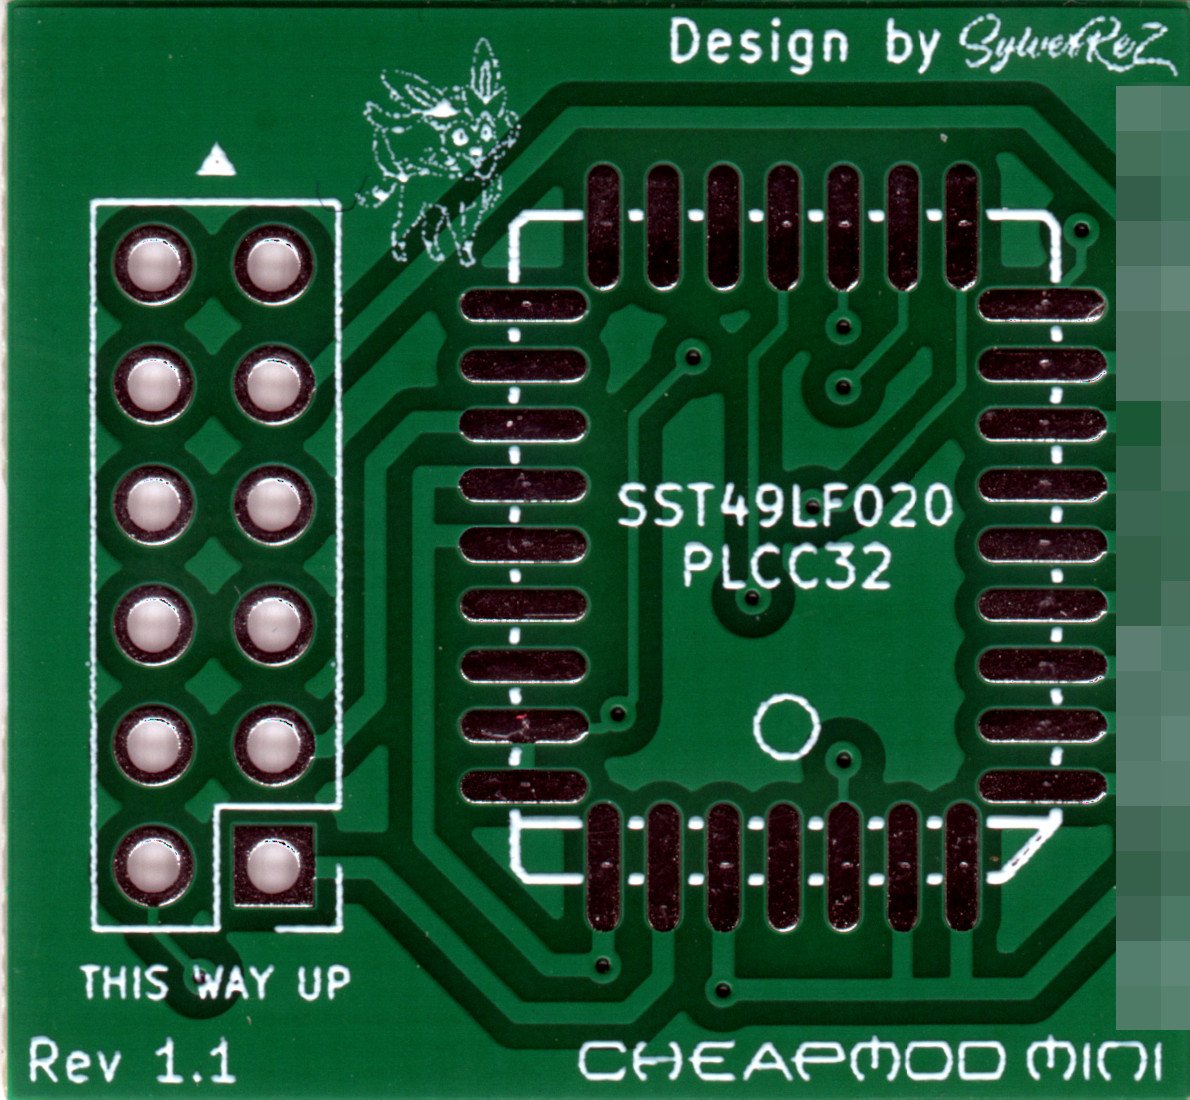 Cheapmod Mini V1.6/B Diagrams